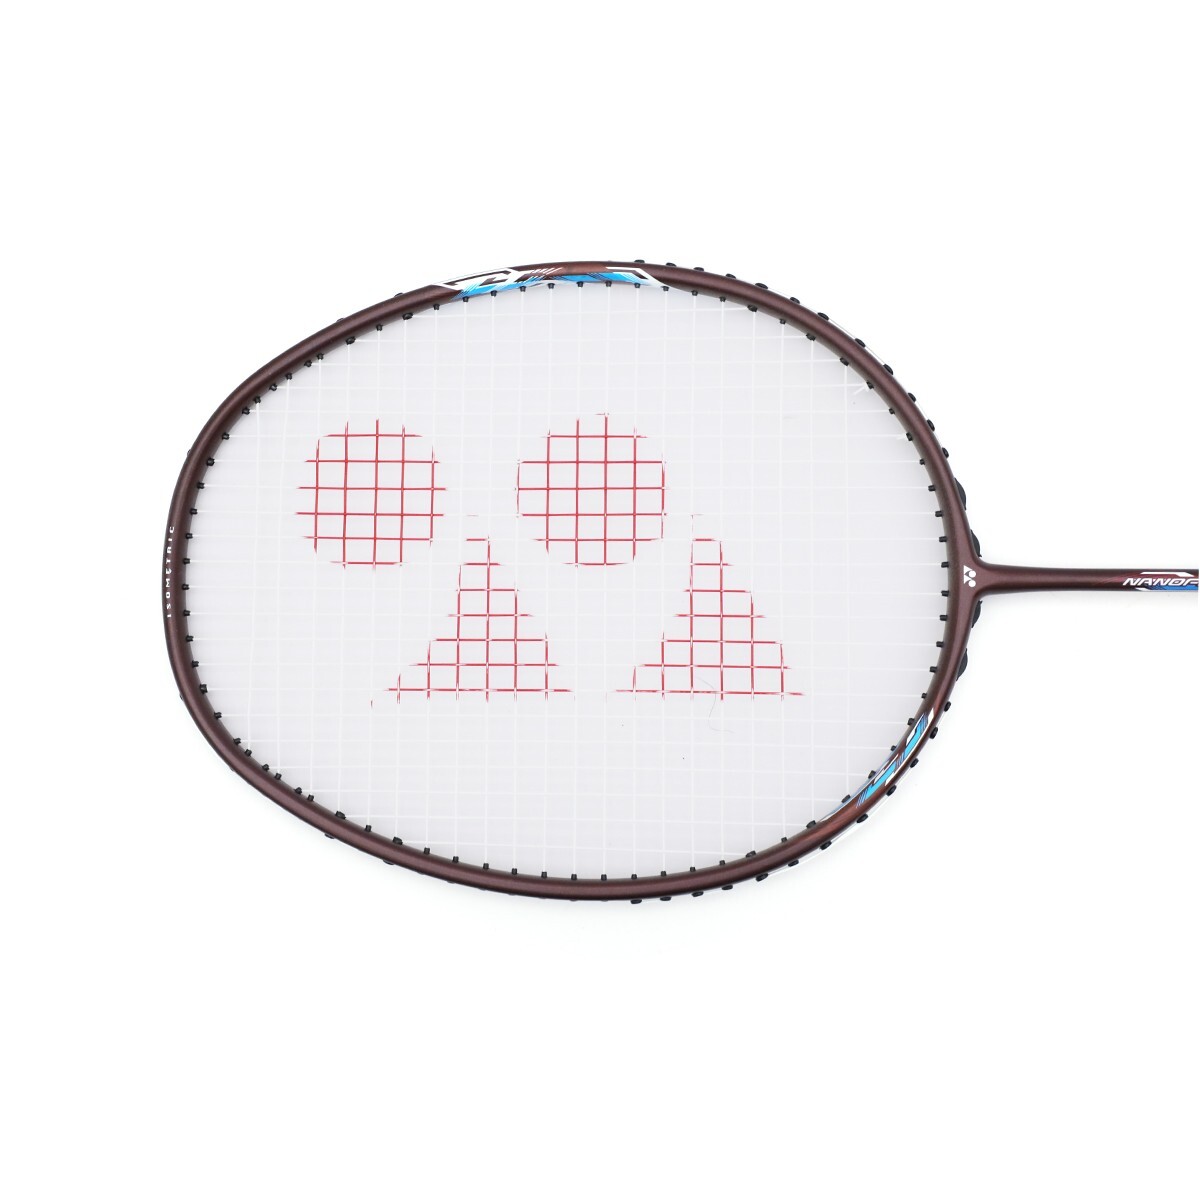 Yonex Badminton Racket-Nanoflare 29IS